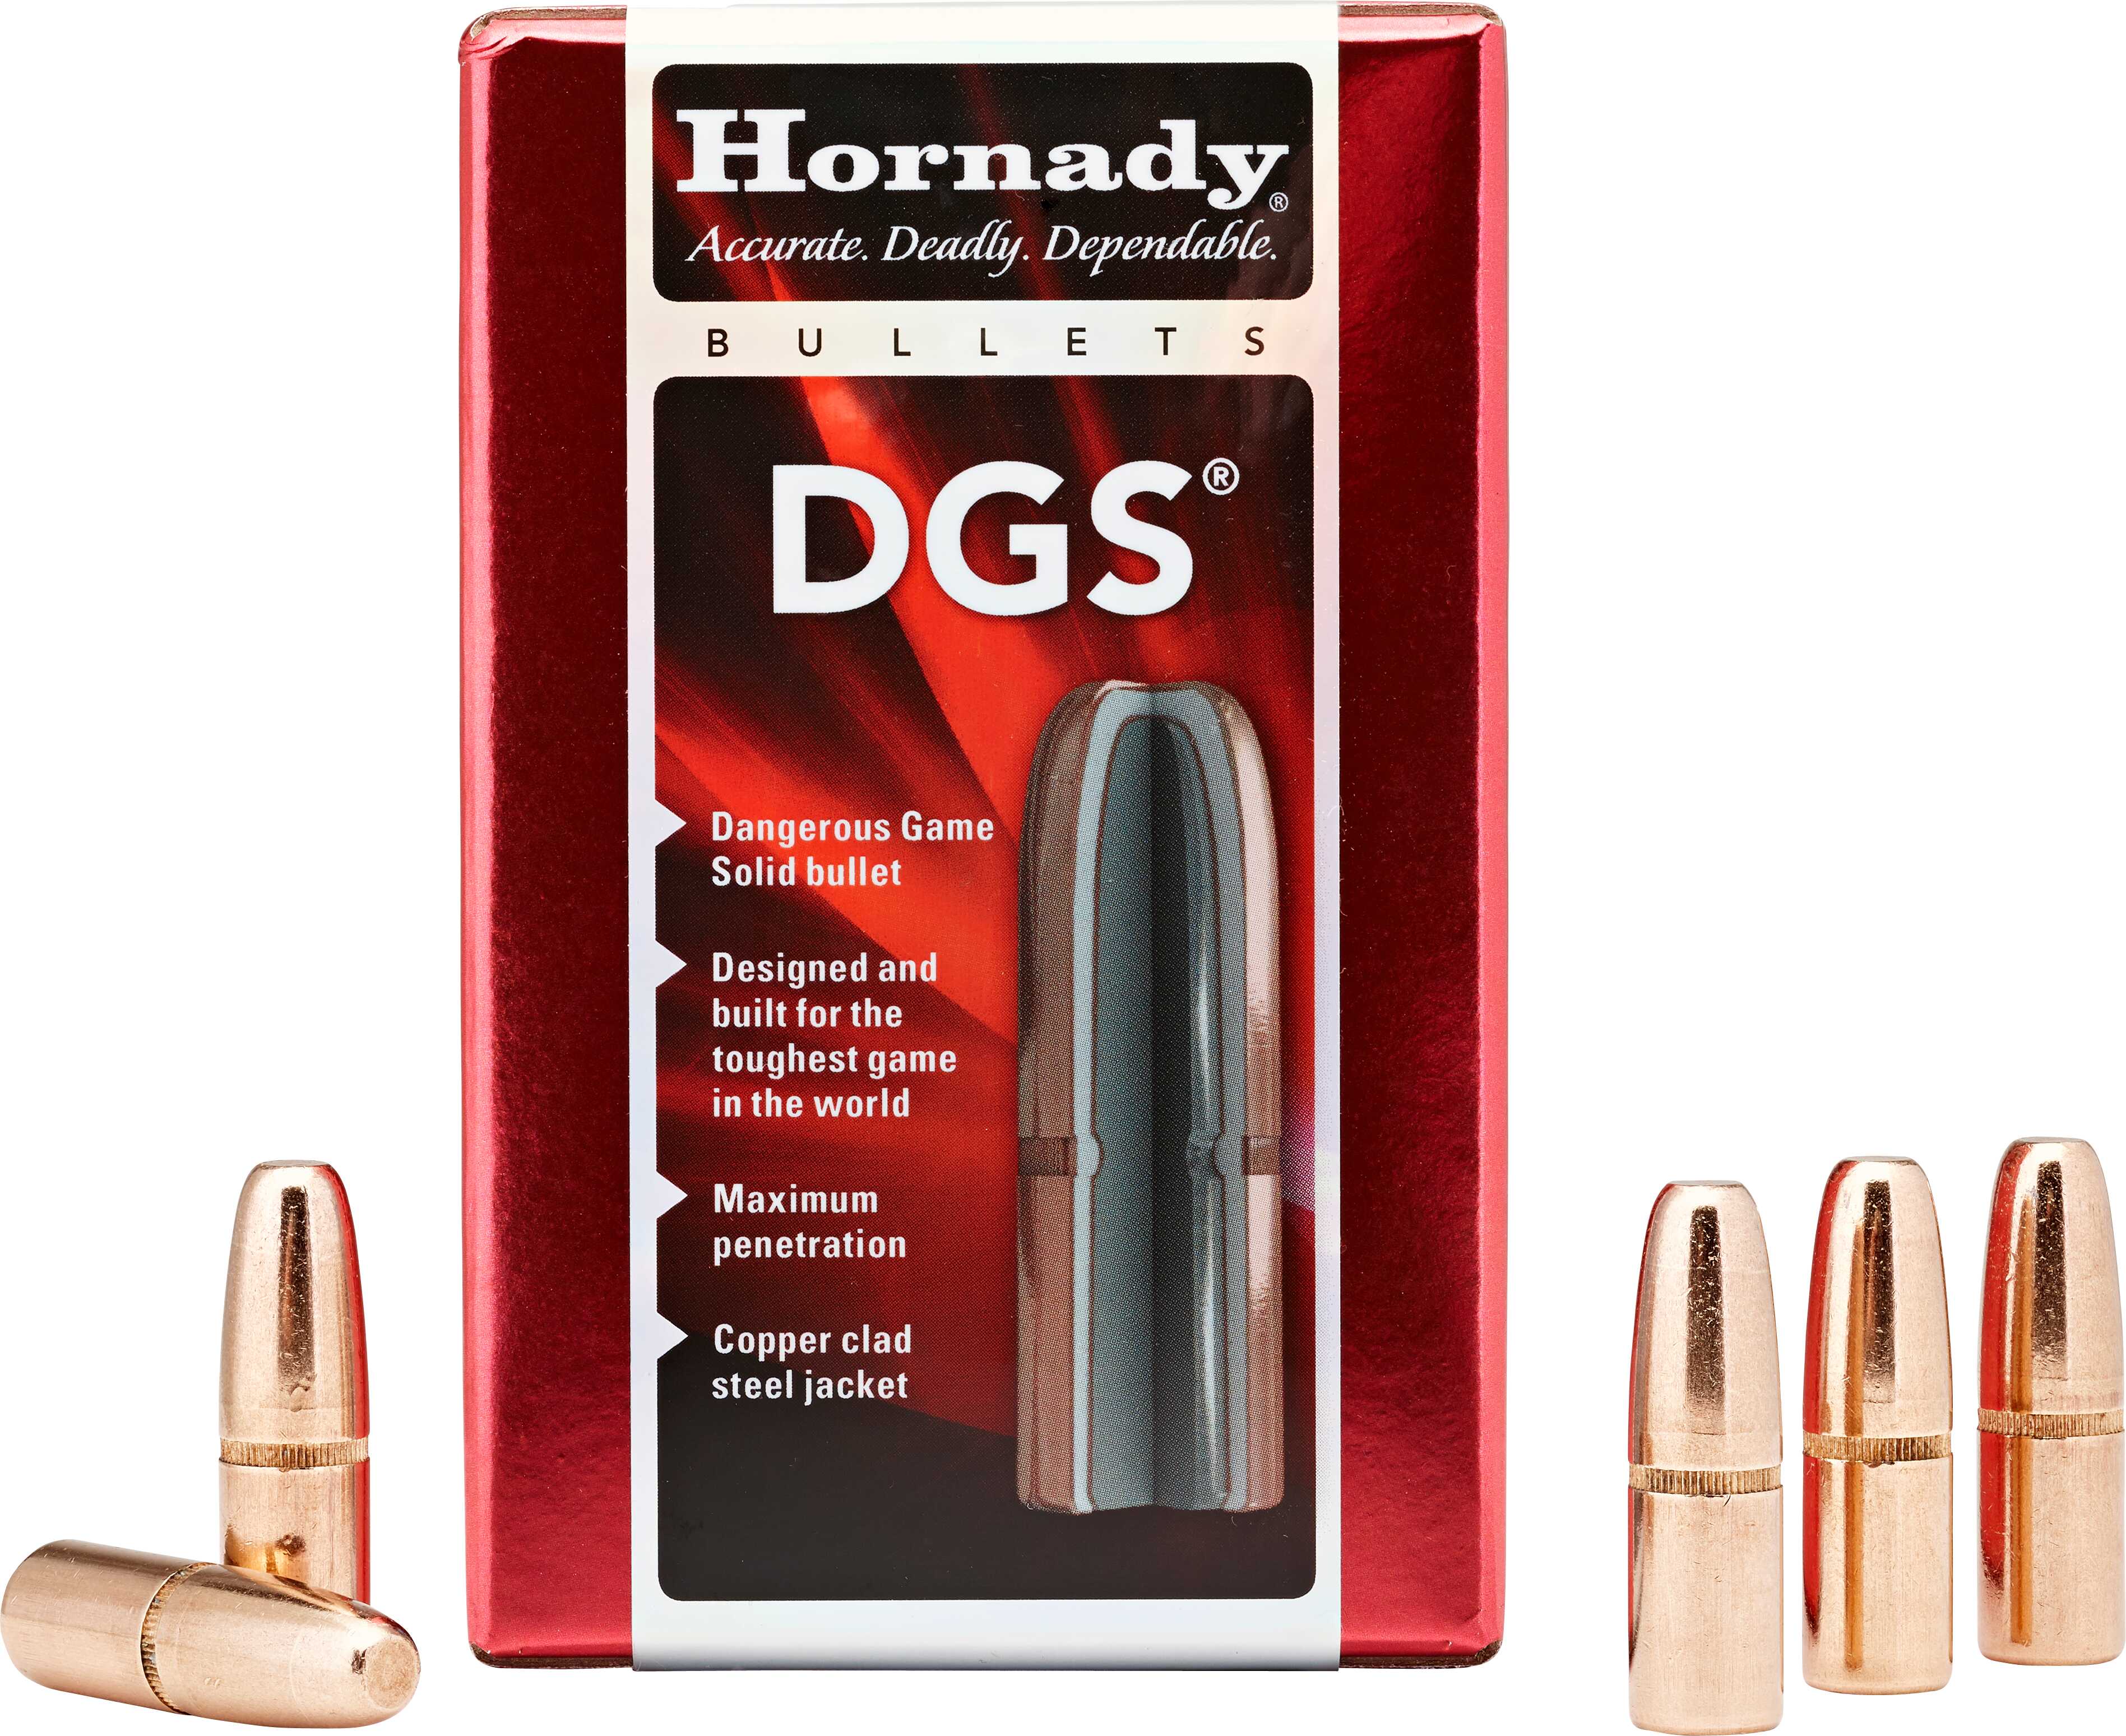 Hornady DGS .510 Cal. 570 Grain Dangerous Game Solid Bullets 50 Per Box Md: 5155